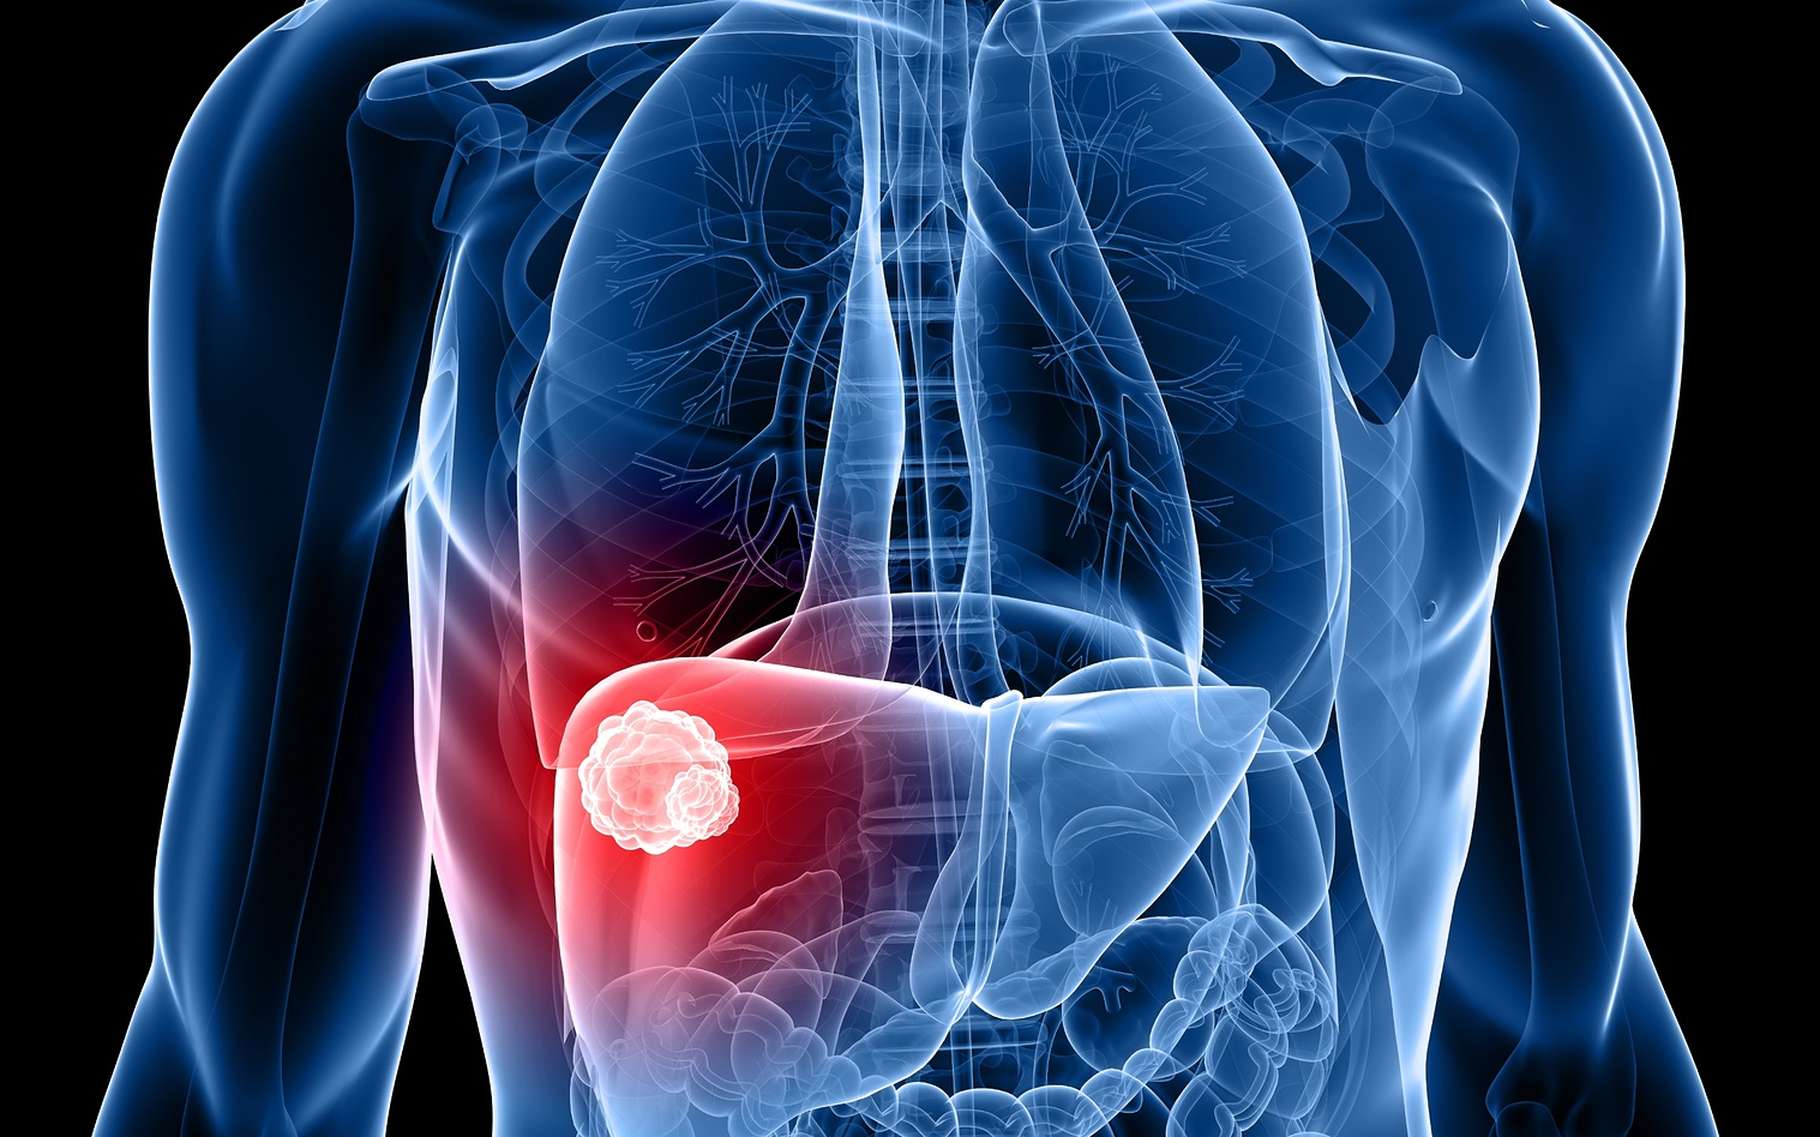 Le cancer du foie est dans 80 % des cas masculin. © Sebastian Kaulitzki, Shutterstock